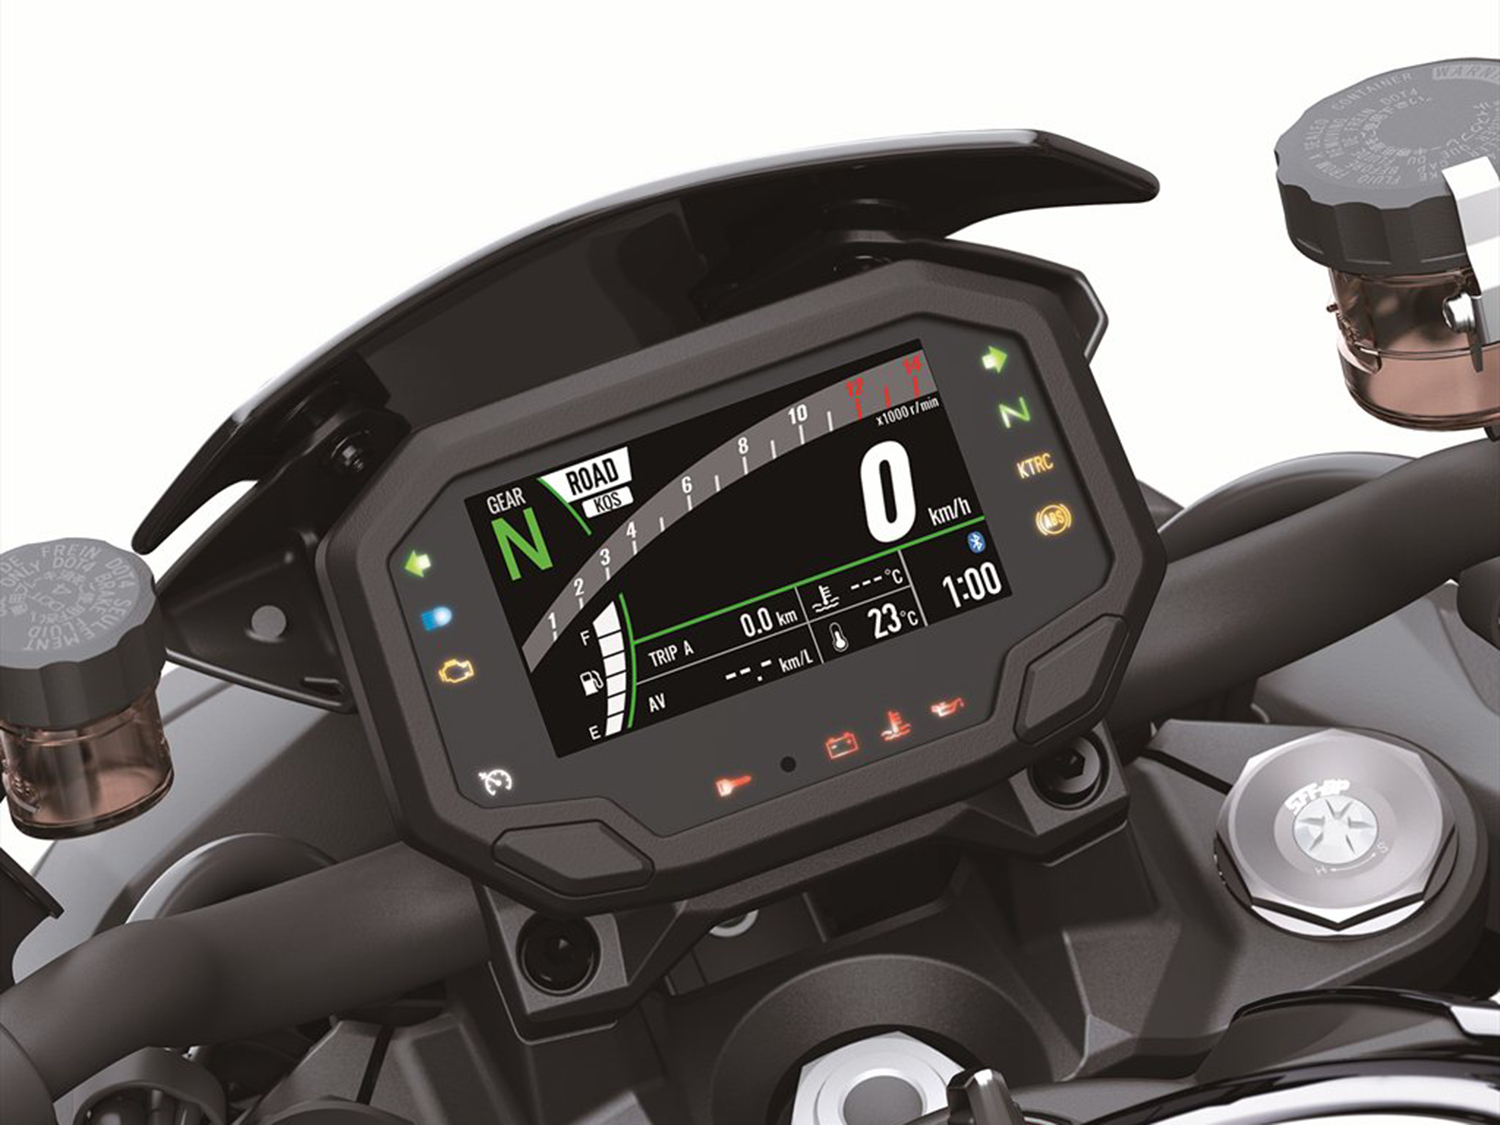 2020 Kawasaki Z H2 Supercharged Announced | Cycle